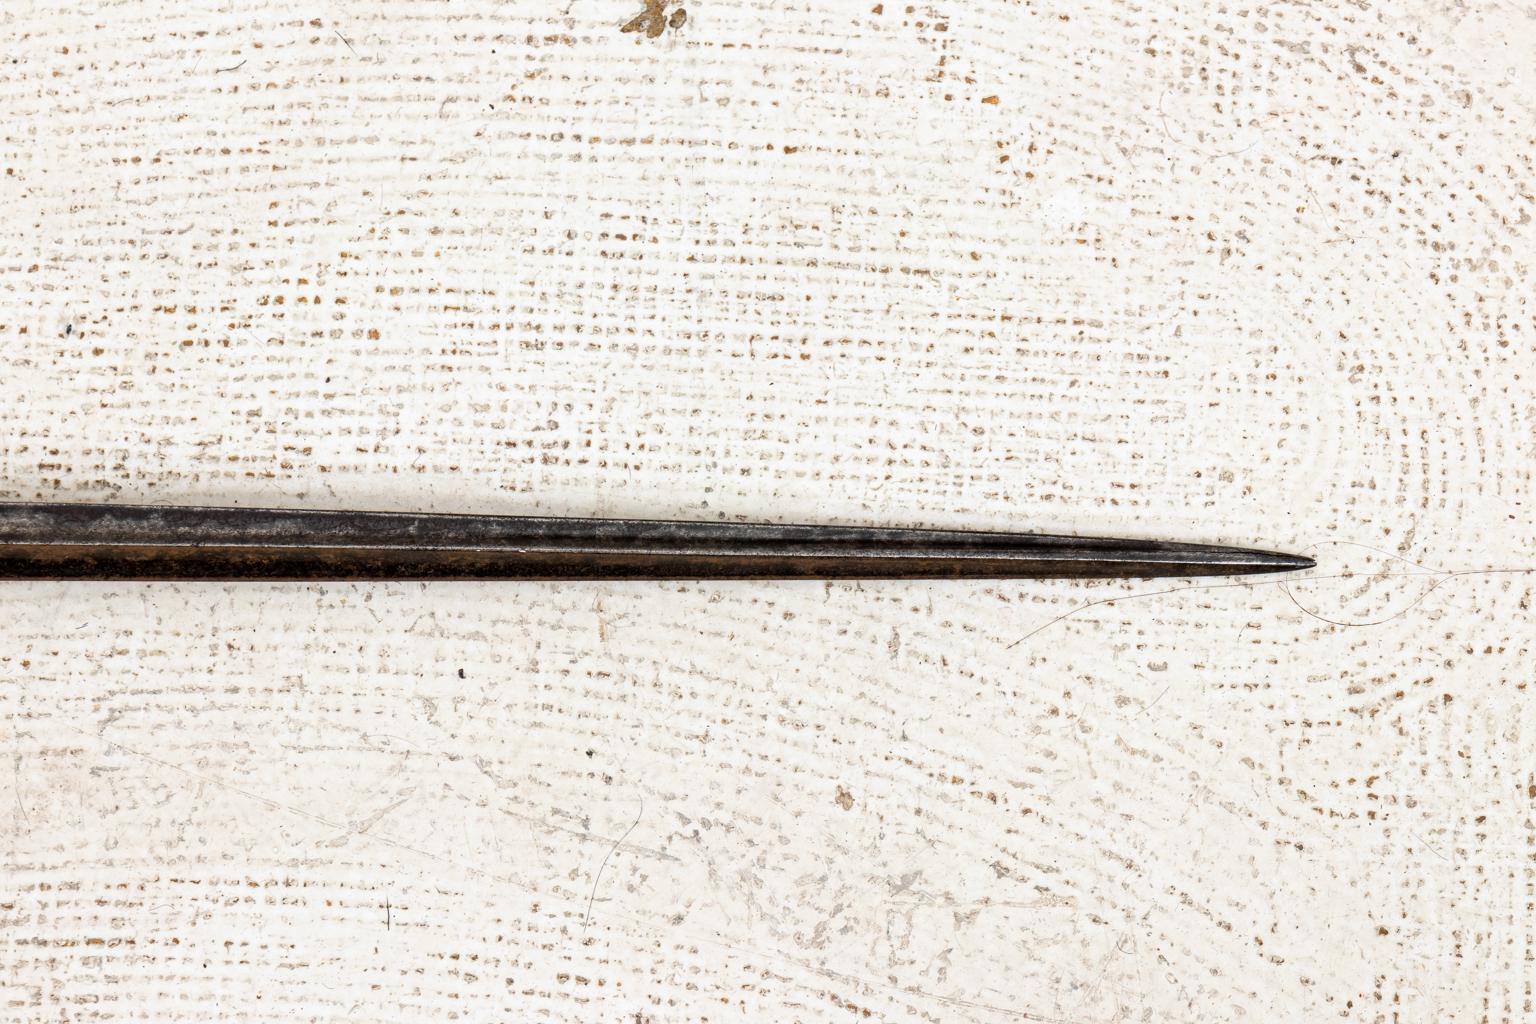 18th Century and Earlier Gentleman's Sword, circa 1700s